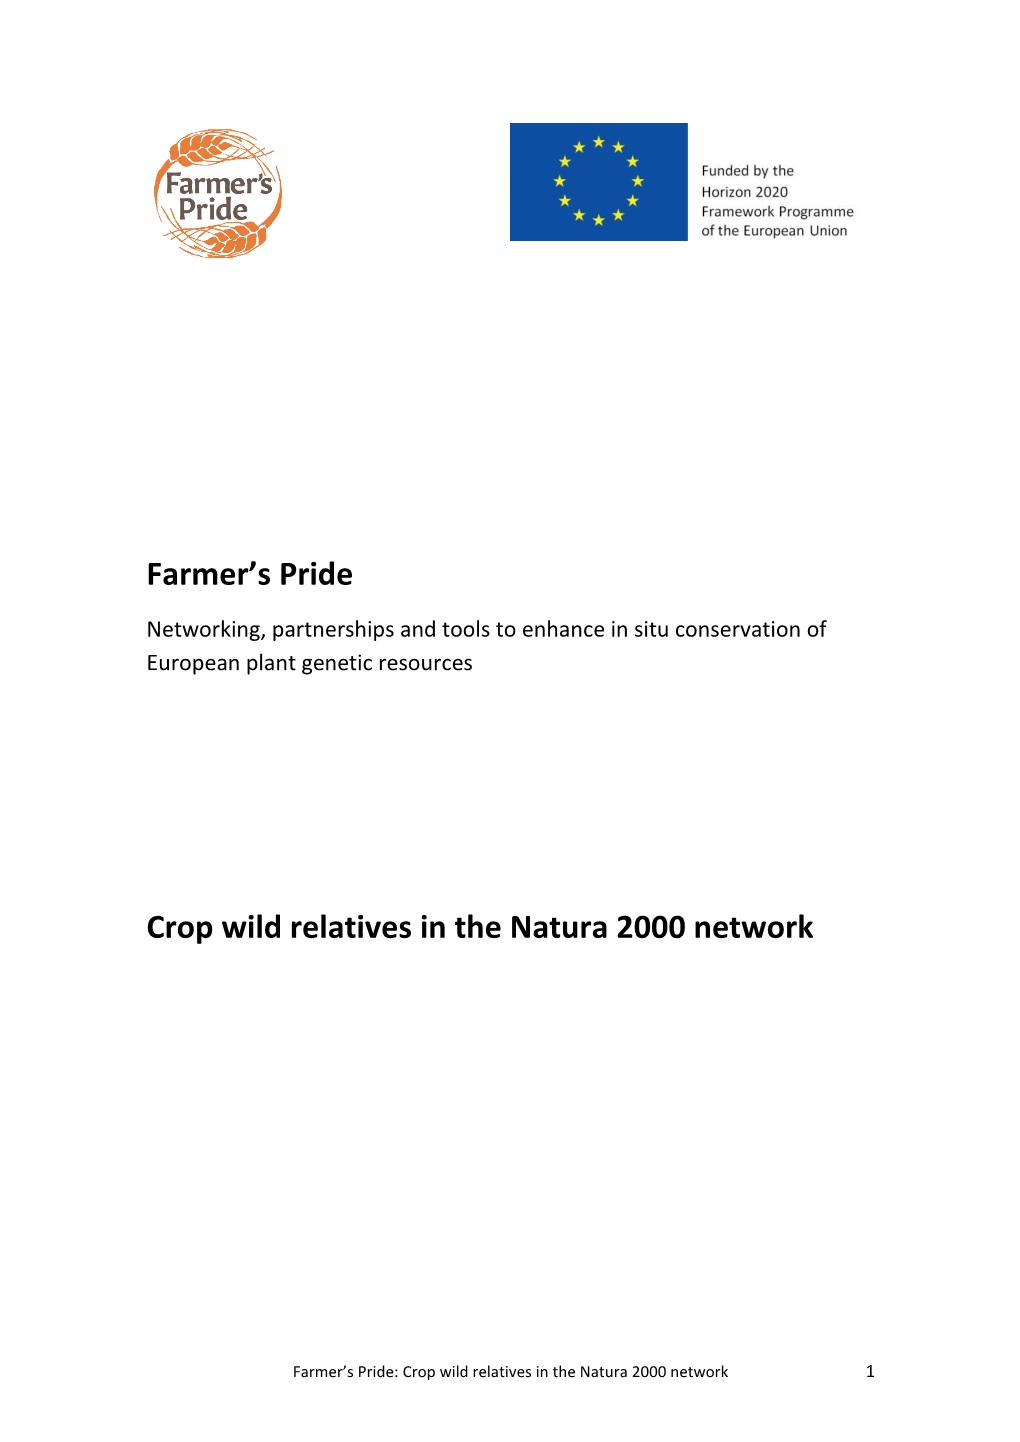 Farmer's Pride Crop Wild Relatives in the Natura 2000 Network